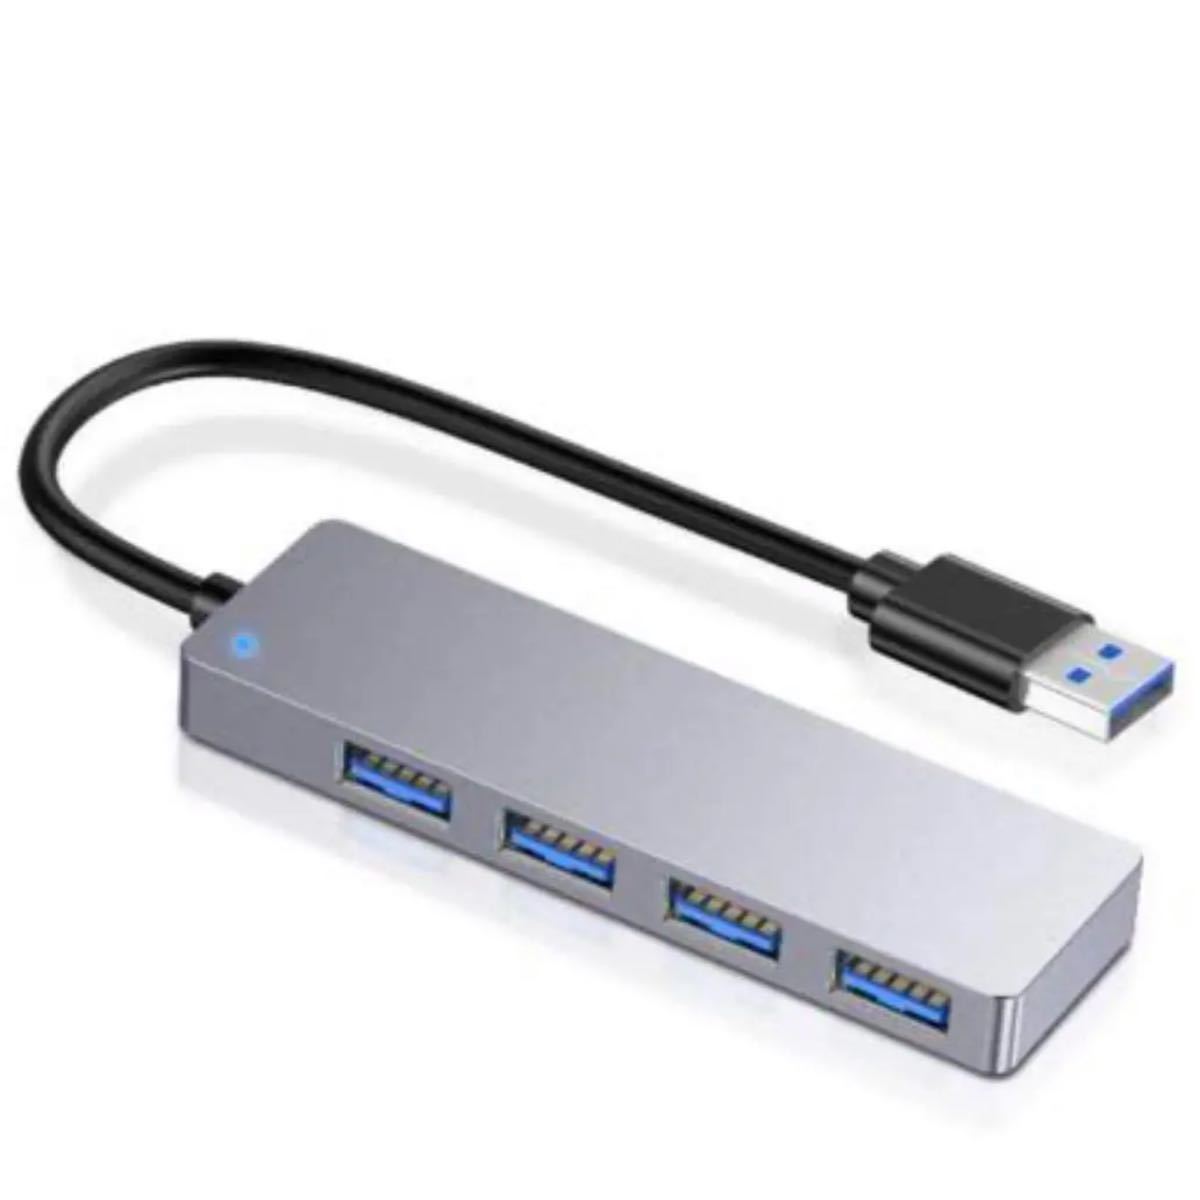  USB3.0ハブ USB3.0 HUB バスパワー 4ポート 拡張 充電 ハイスピード 高速データ転送 コンパクト